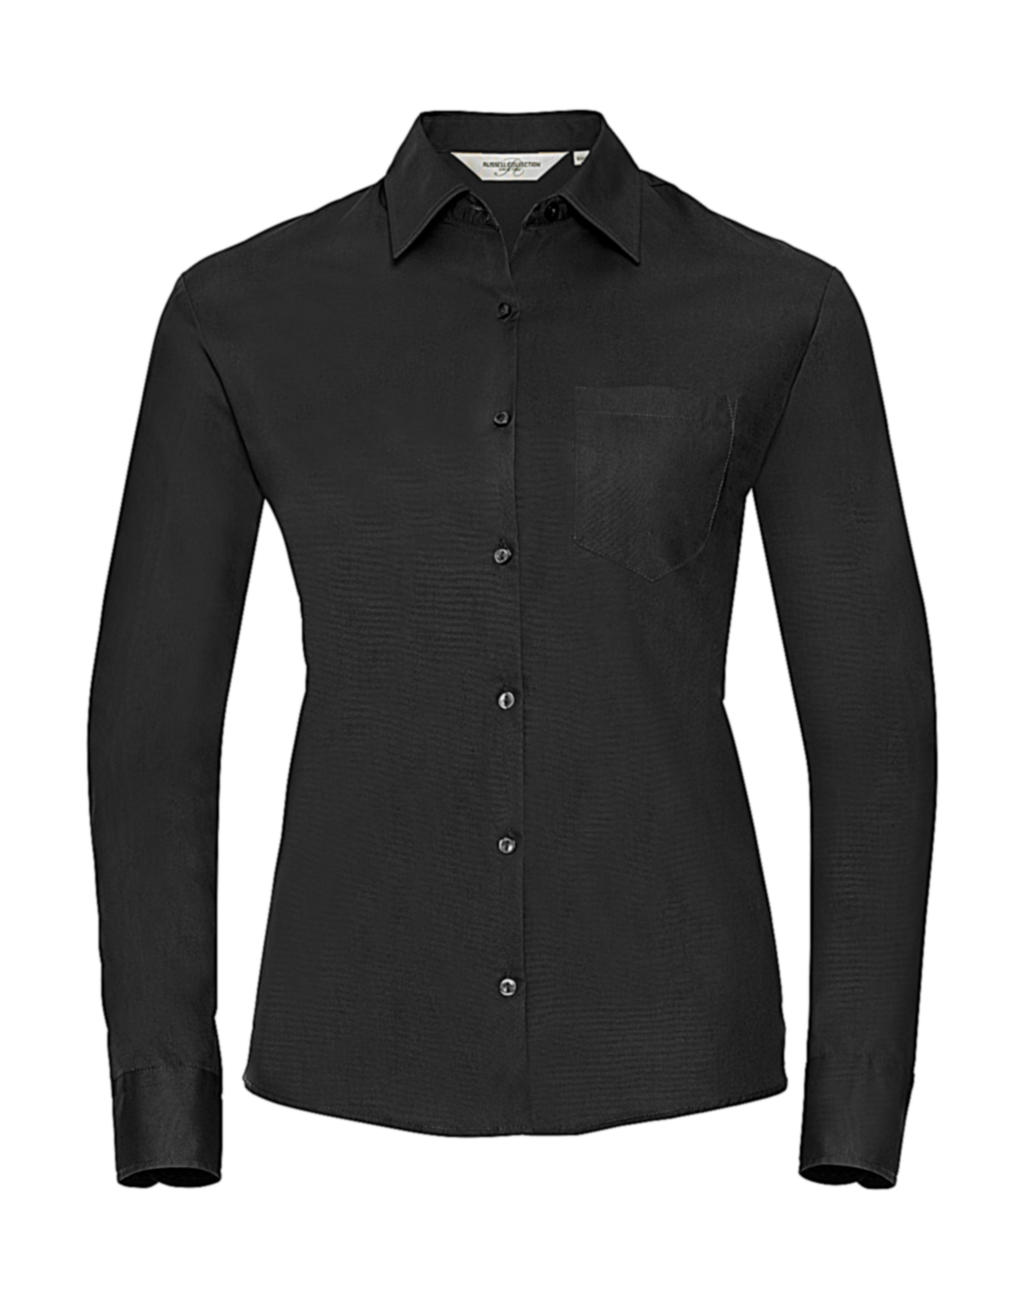  Ladies Cotton Poplin Shirt LS in Farbe Black